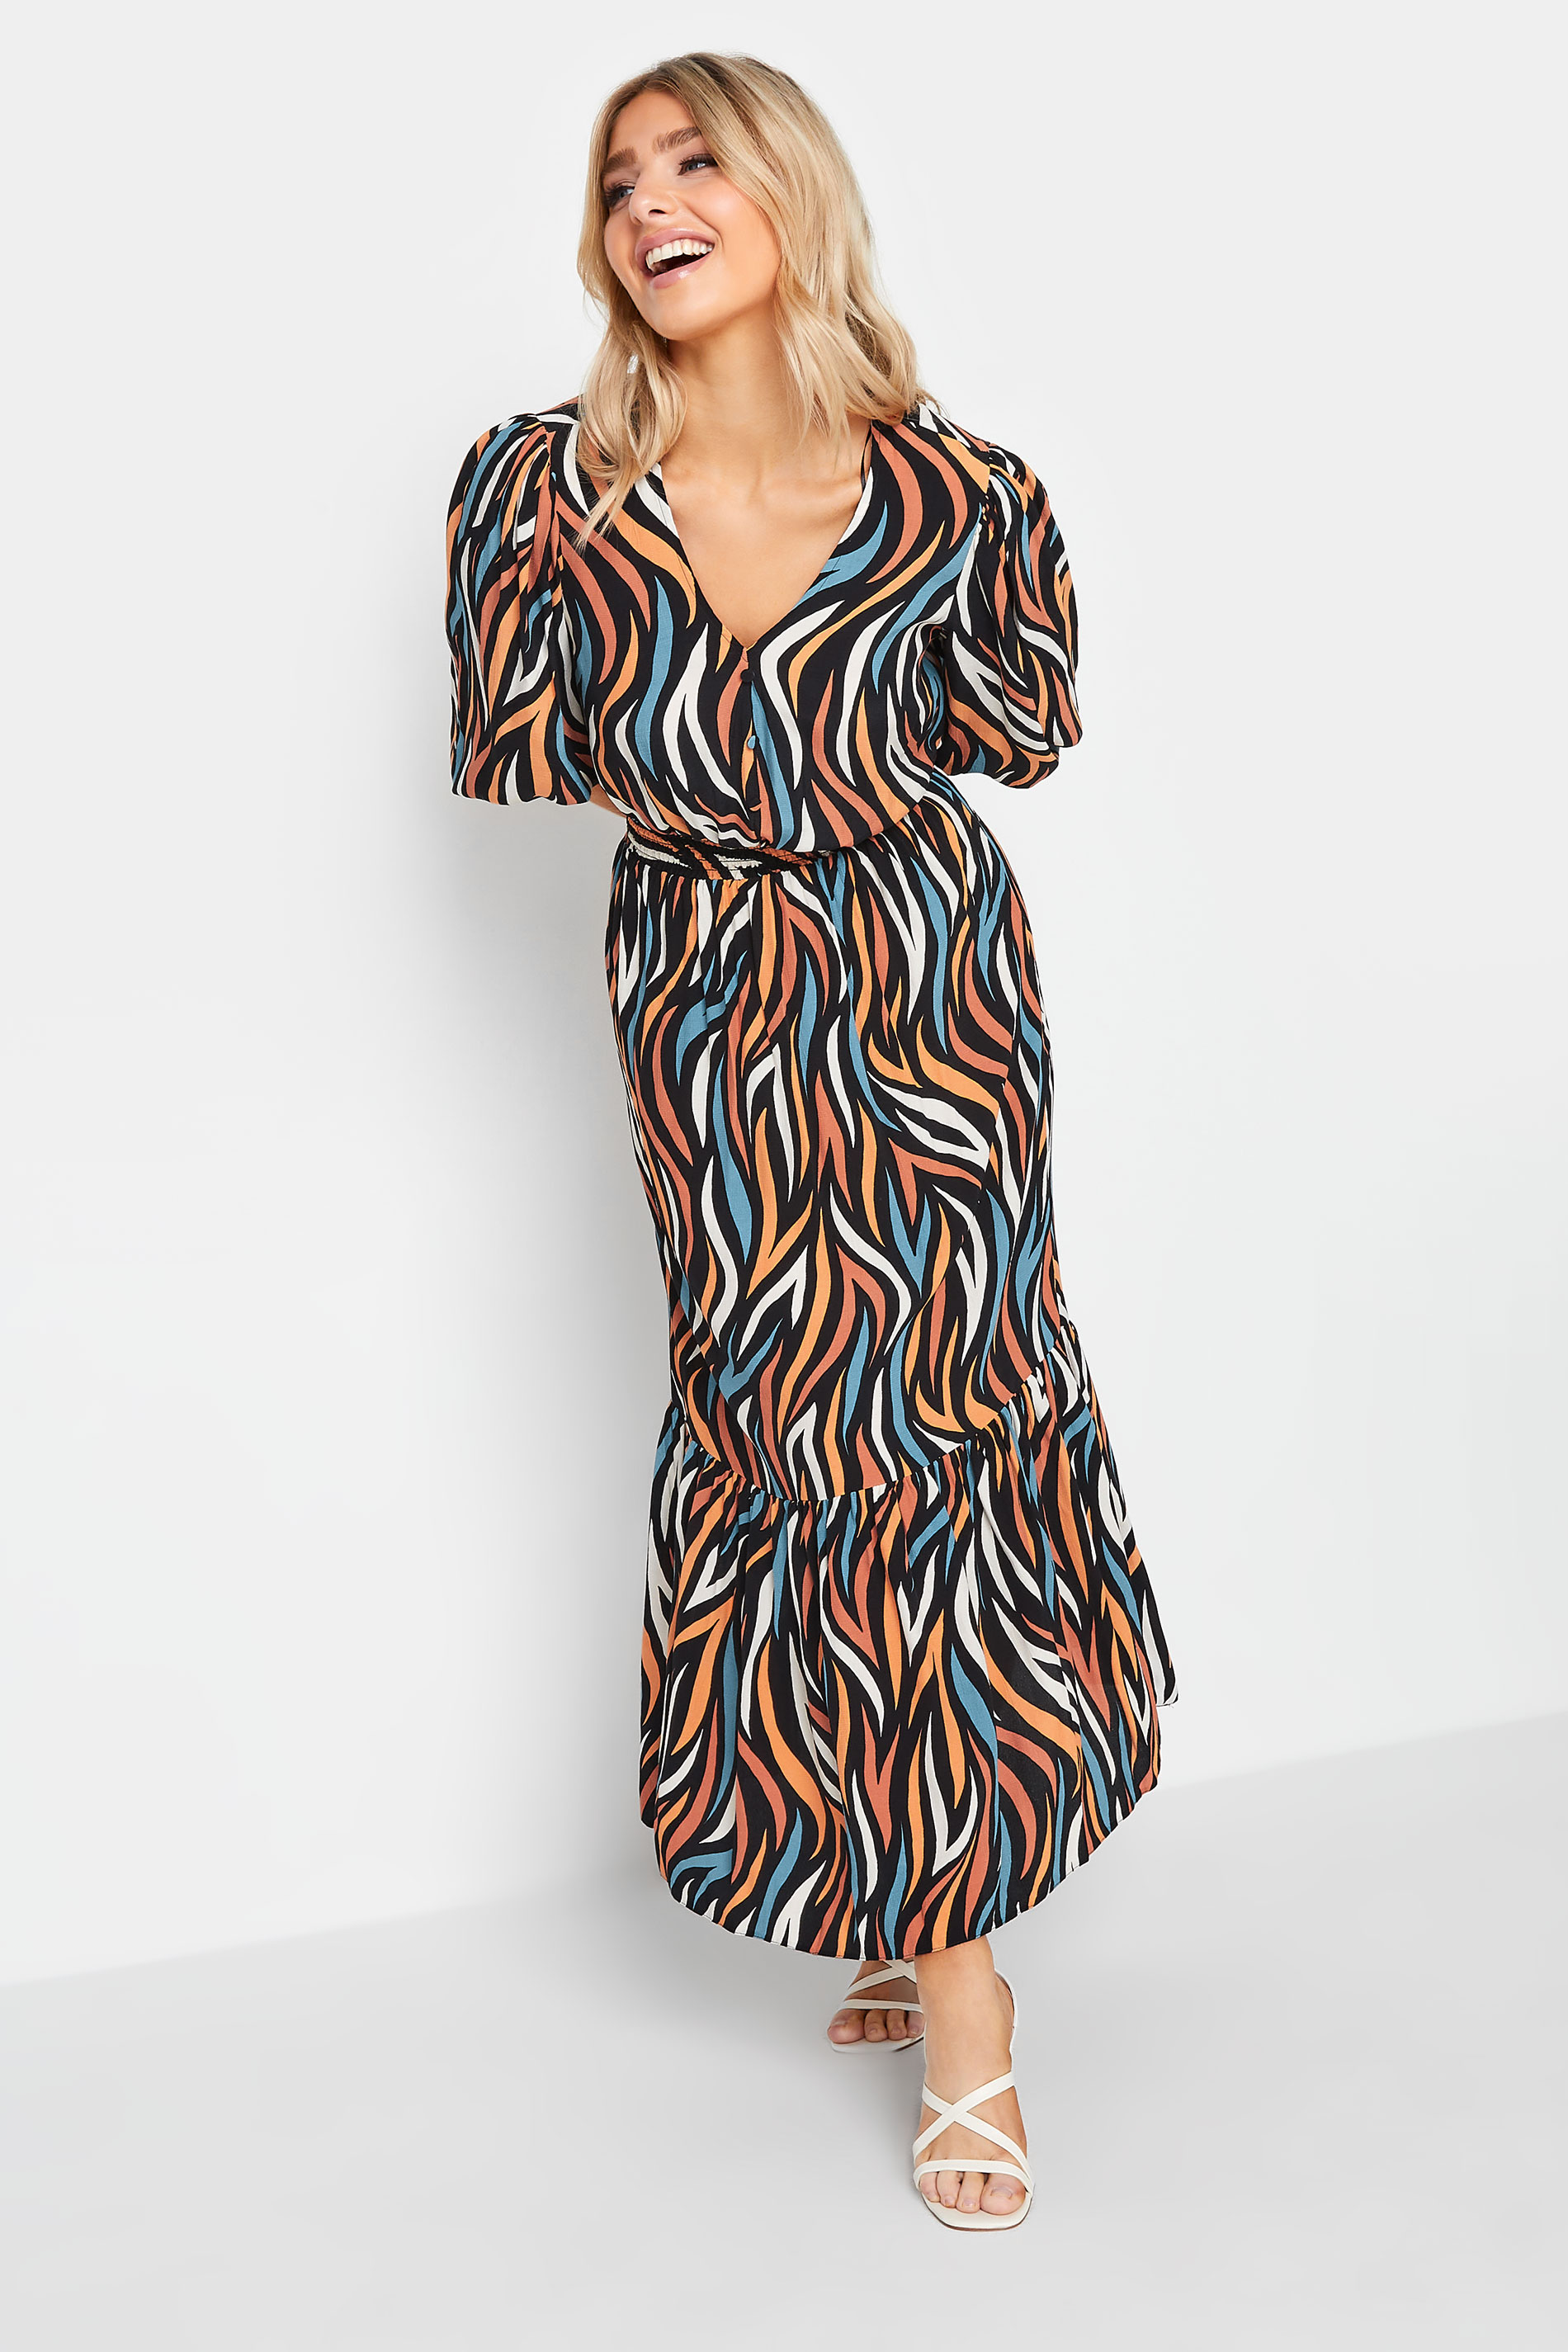 M&Co Black Abstract Print Maxi Dress | M&Co 2